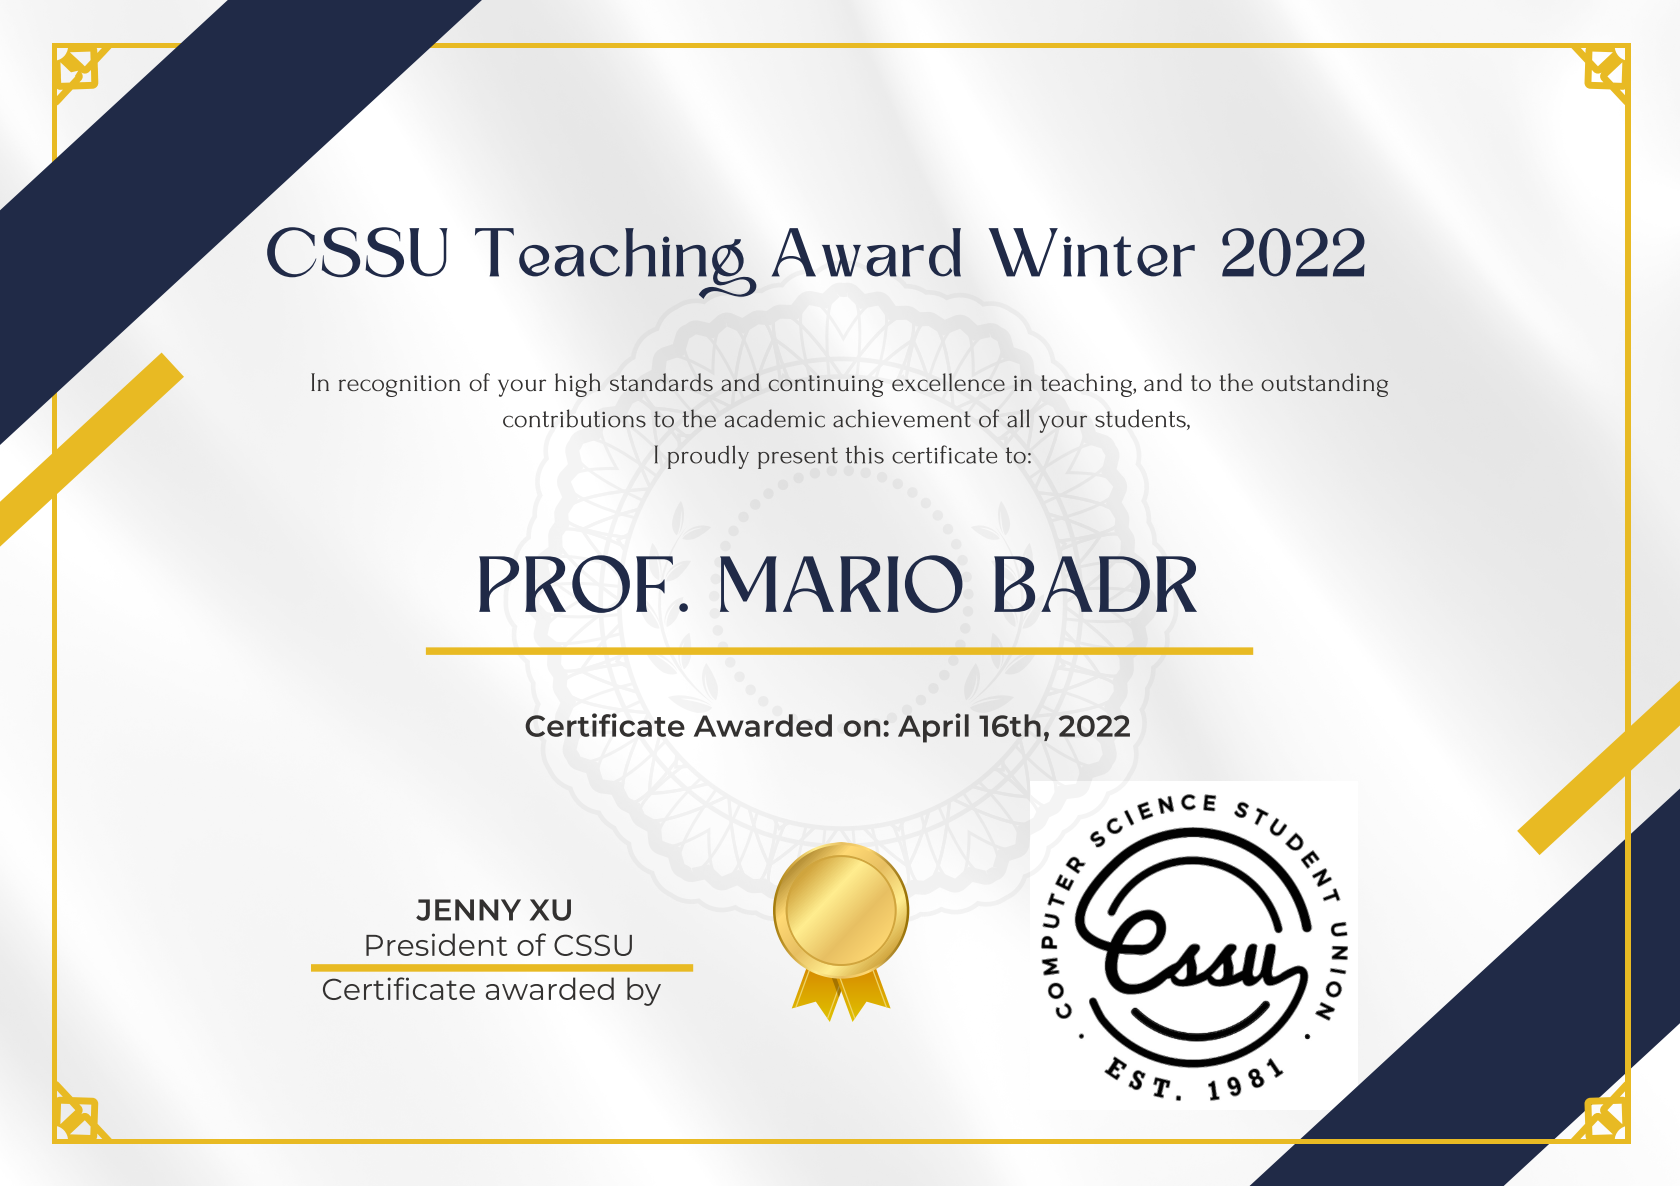 CSSU Teaching Award Winter 2022